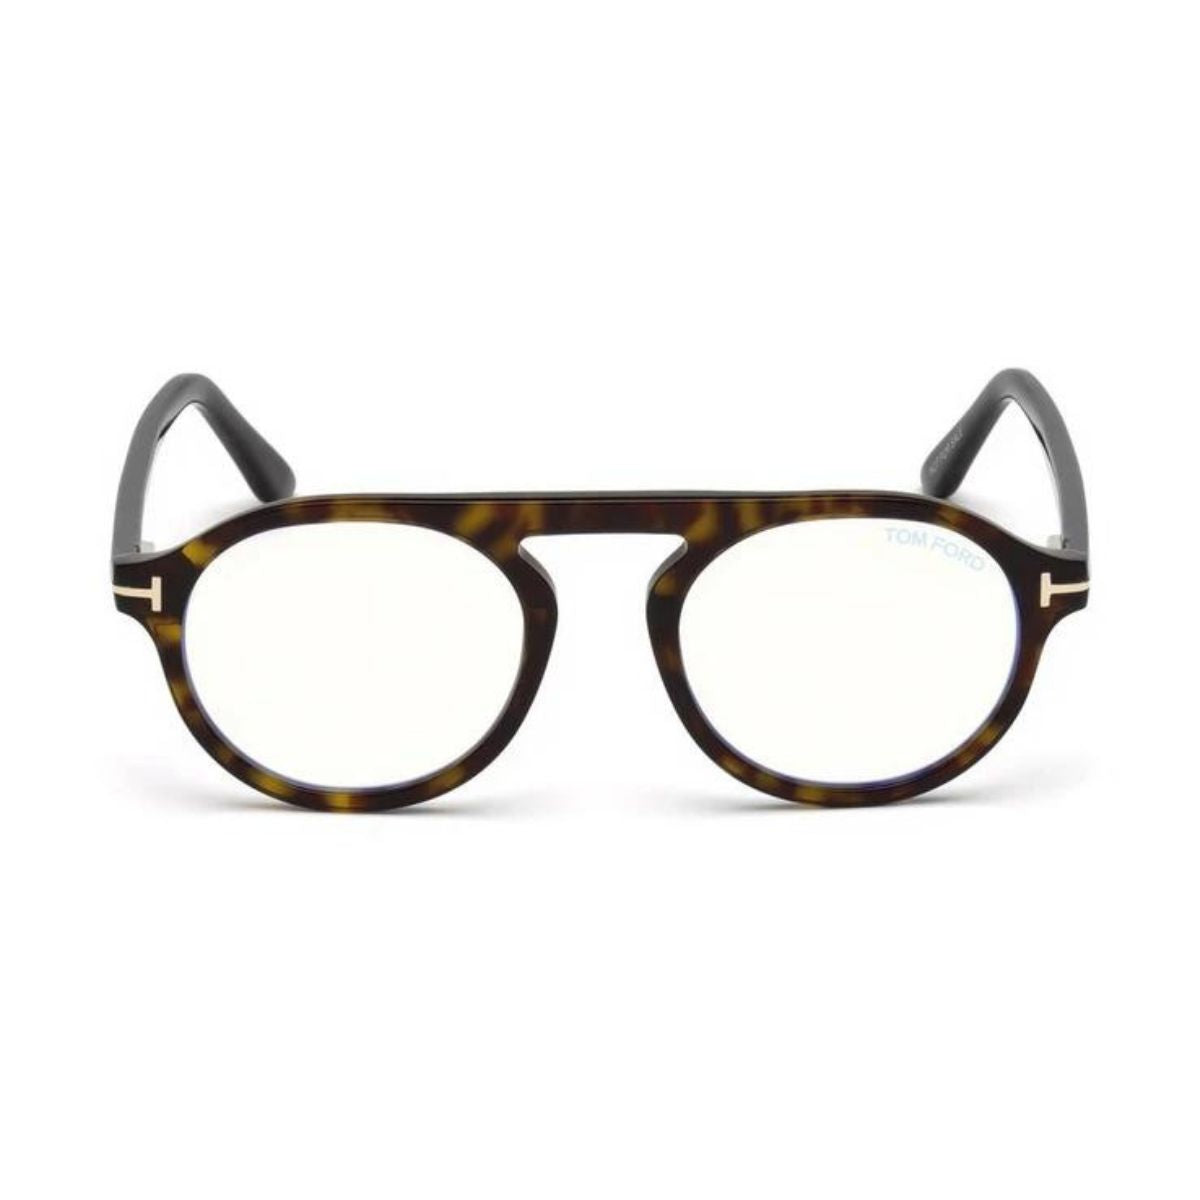 "buy Tom Ford 5534-B 052 round shape eyeglasses frame for men's and women's  online at optorium"